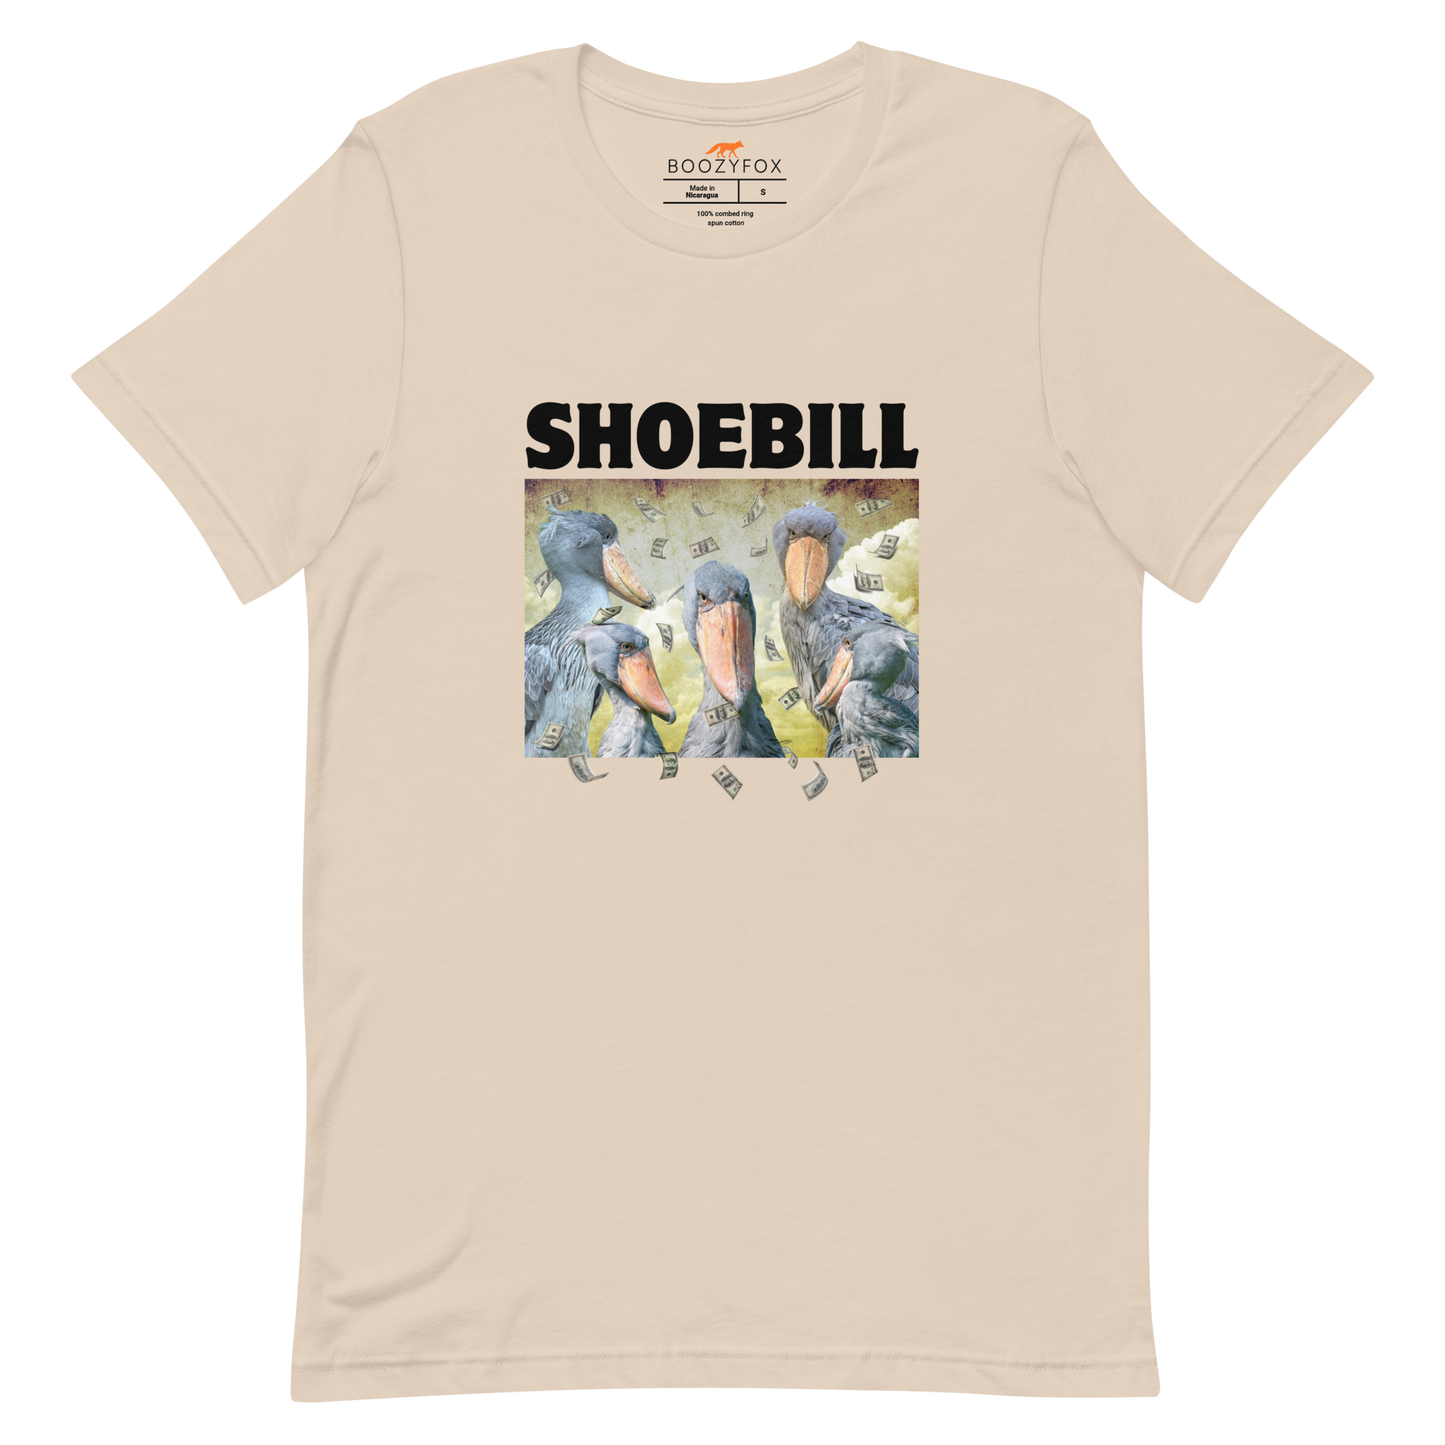 Soft Cream Premium Shoebill Tee featuring cool Shoebill graphic on the chest - Artsy/Funny Graphic Shoebill Stork Tees - Boozy Fox